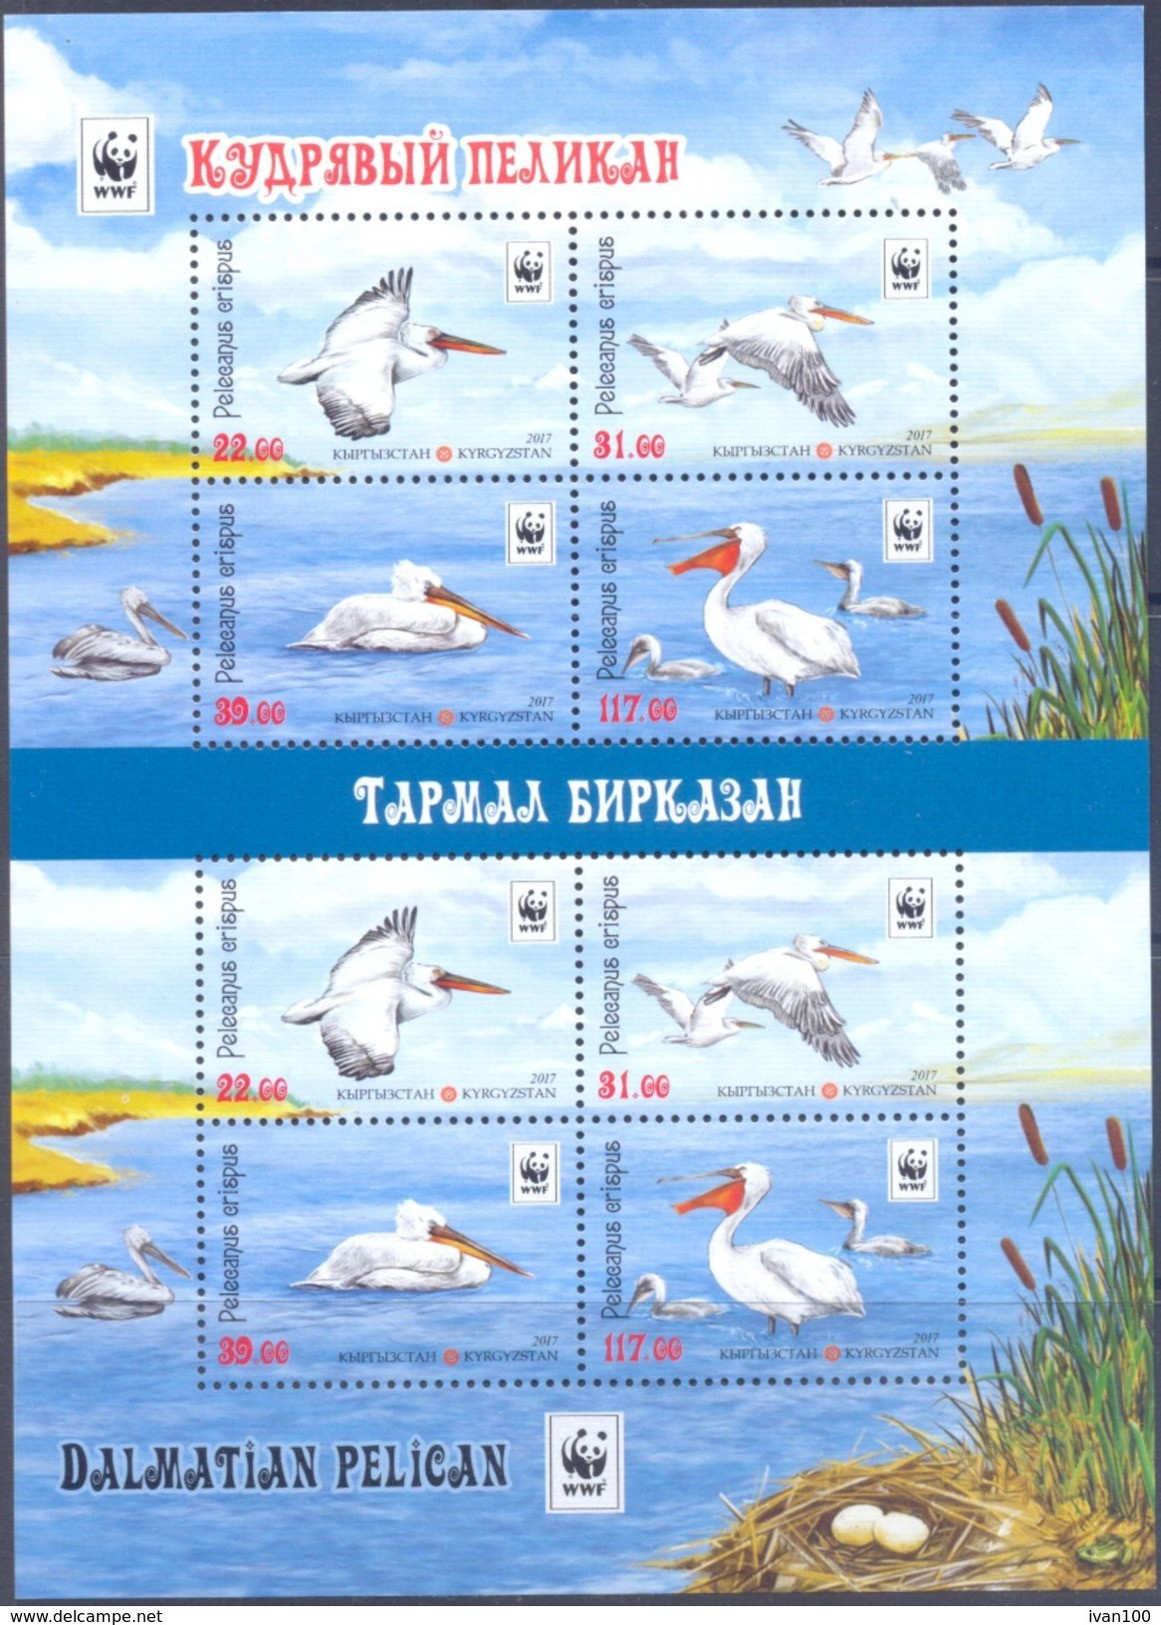 2017. Kyrgyzstan, WWF, Birds, Dalmatian Pelican, Sheetlet Perforated, Mint/ ** - Kirgisistan